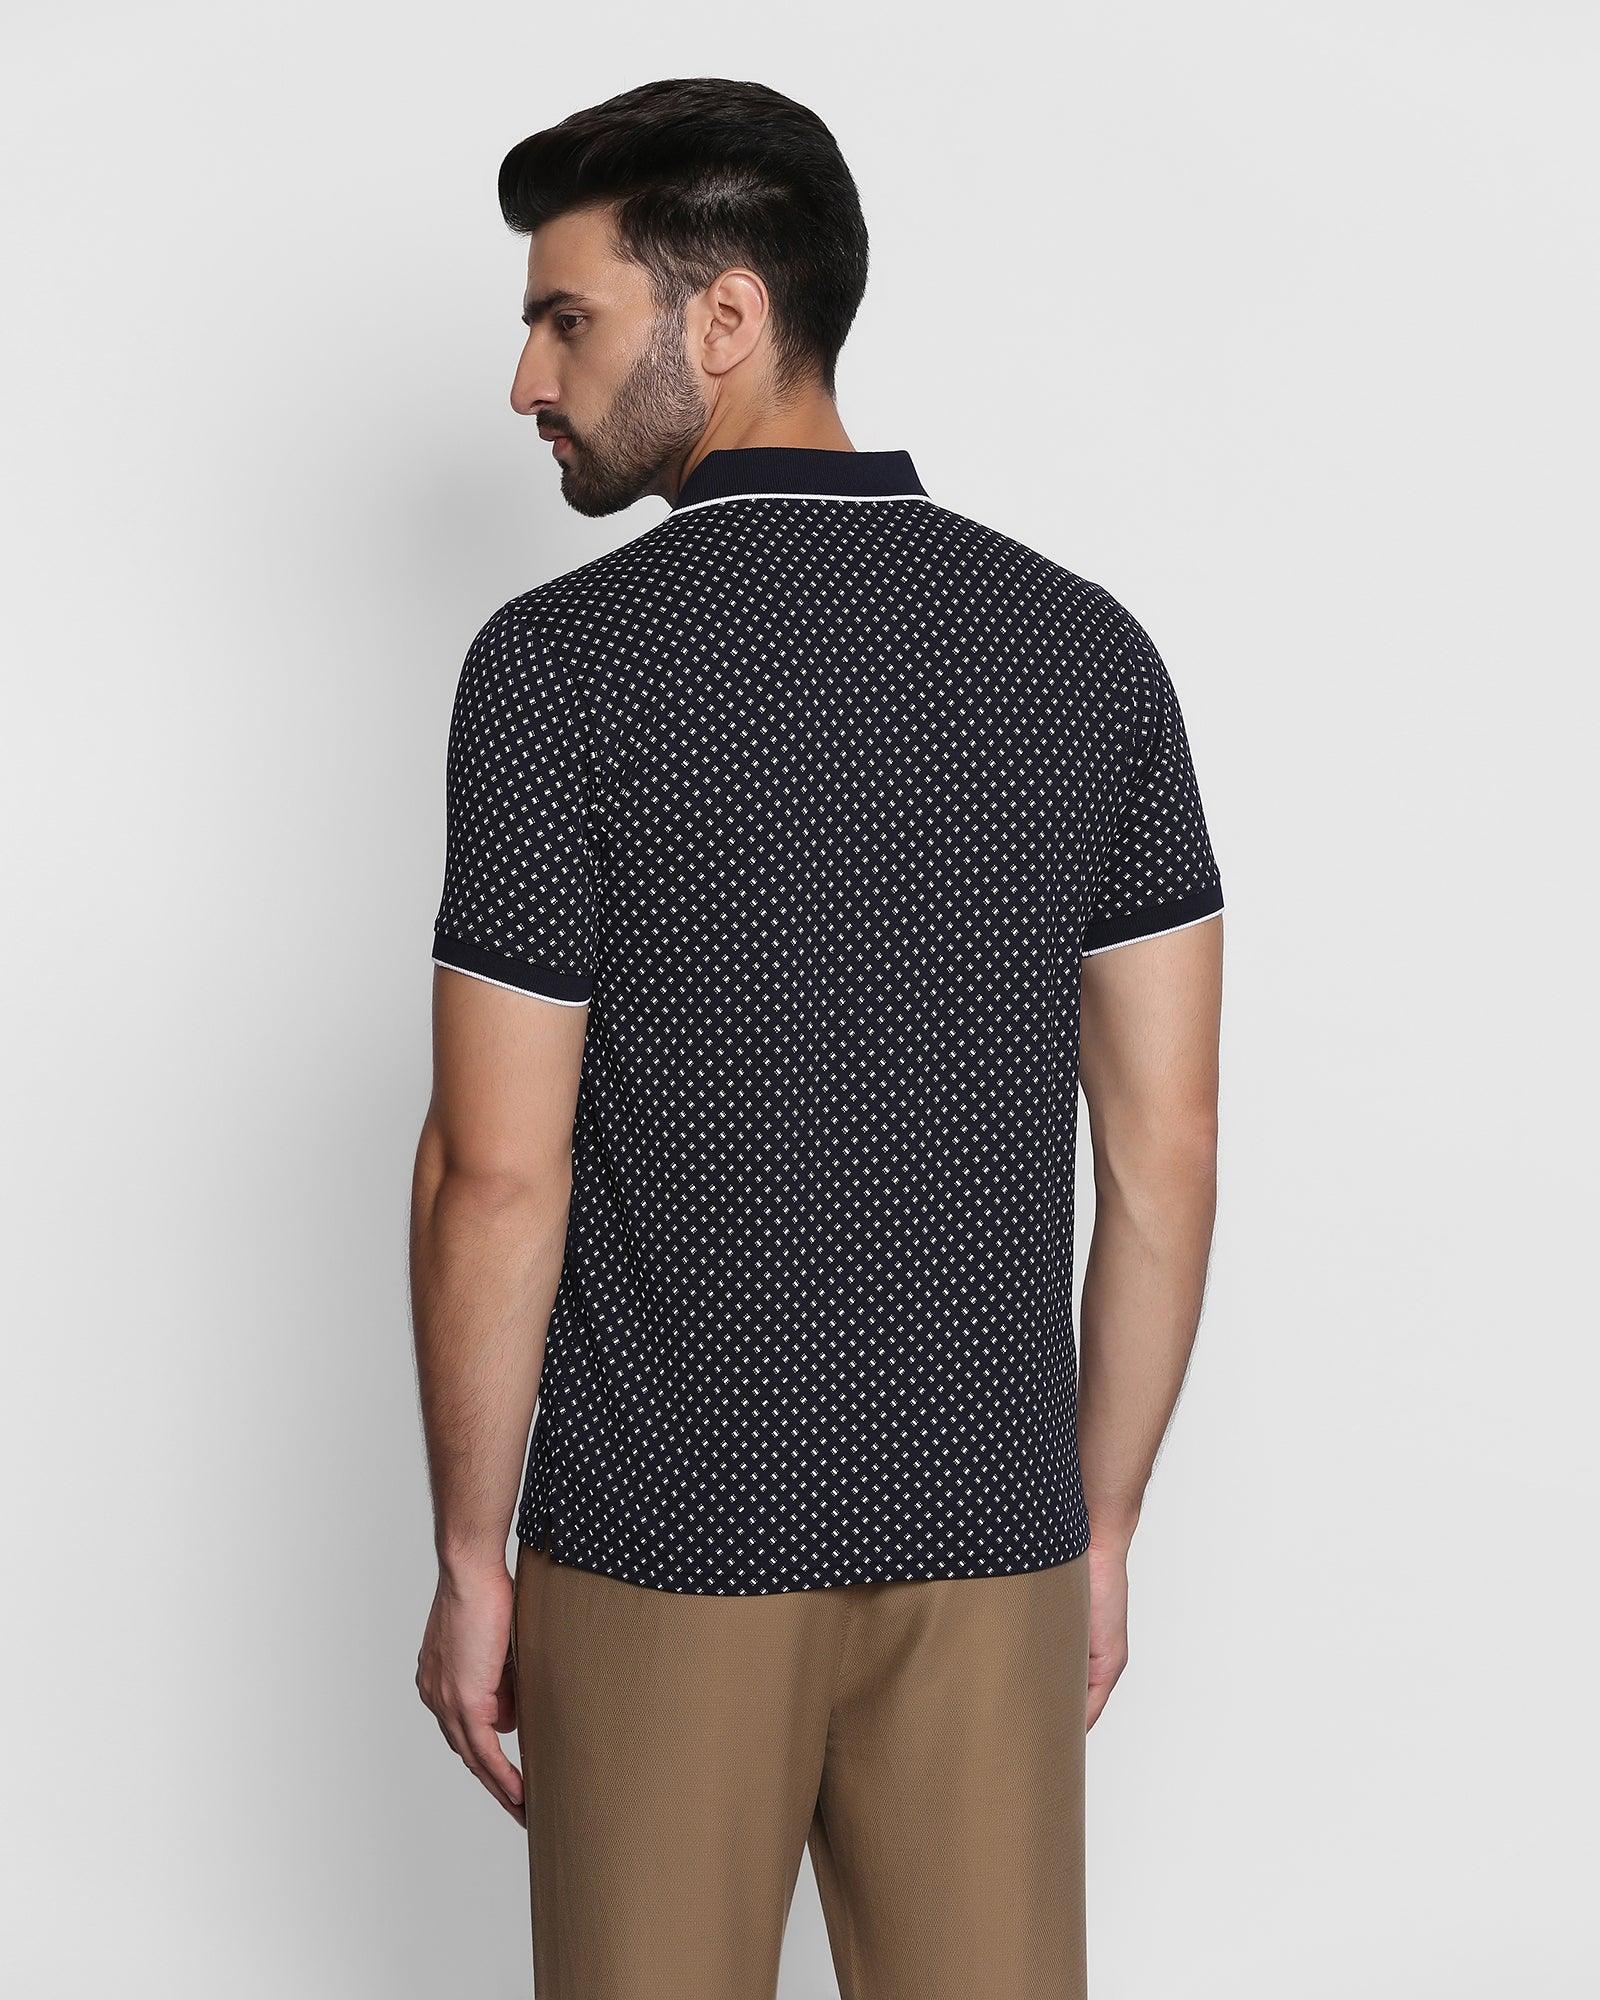 Polo Navy Printed T Shirt - Abstract